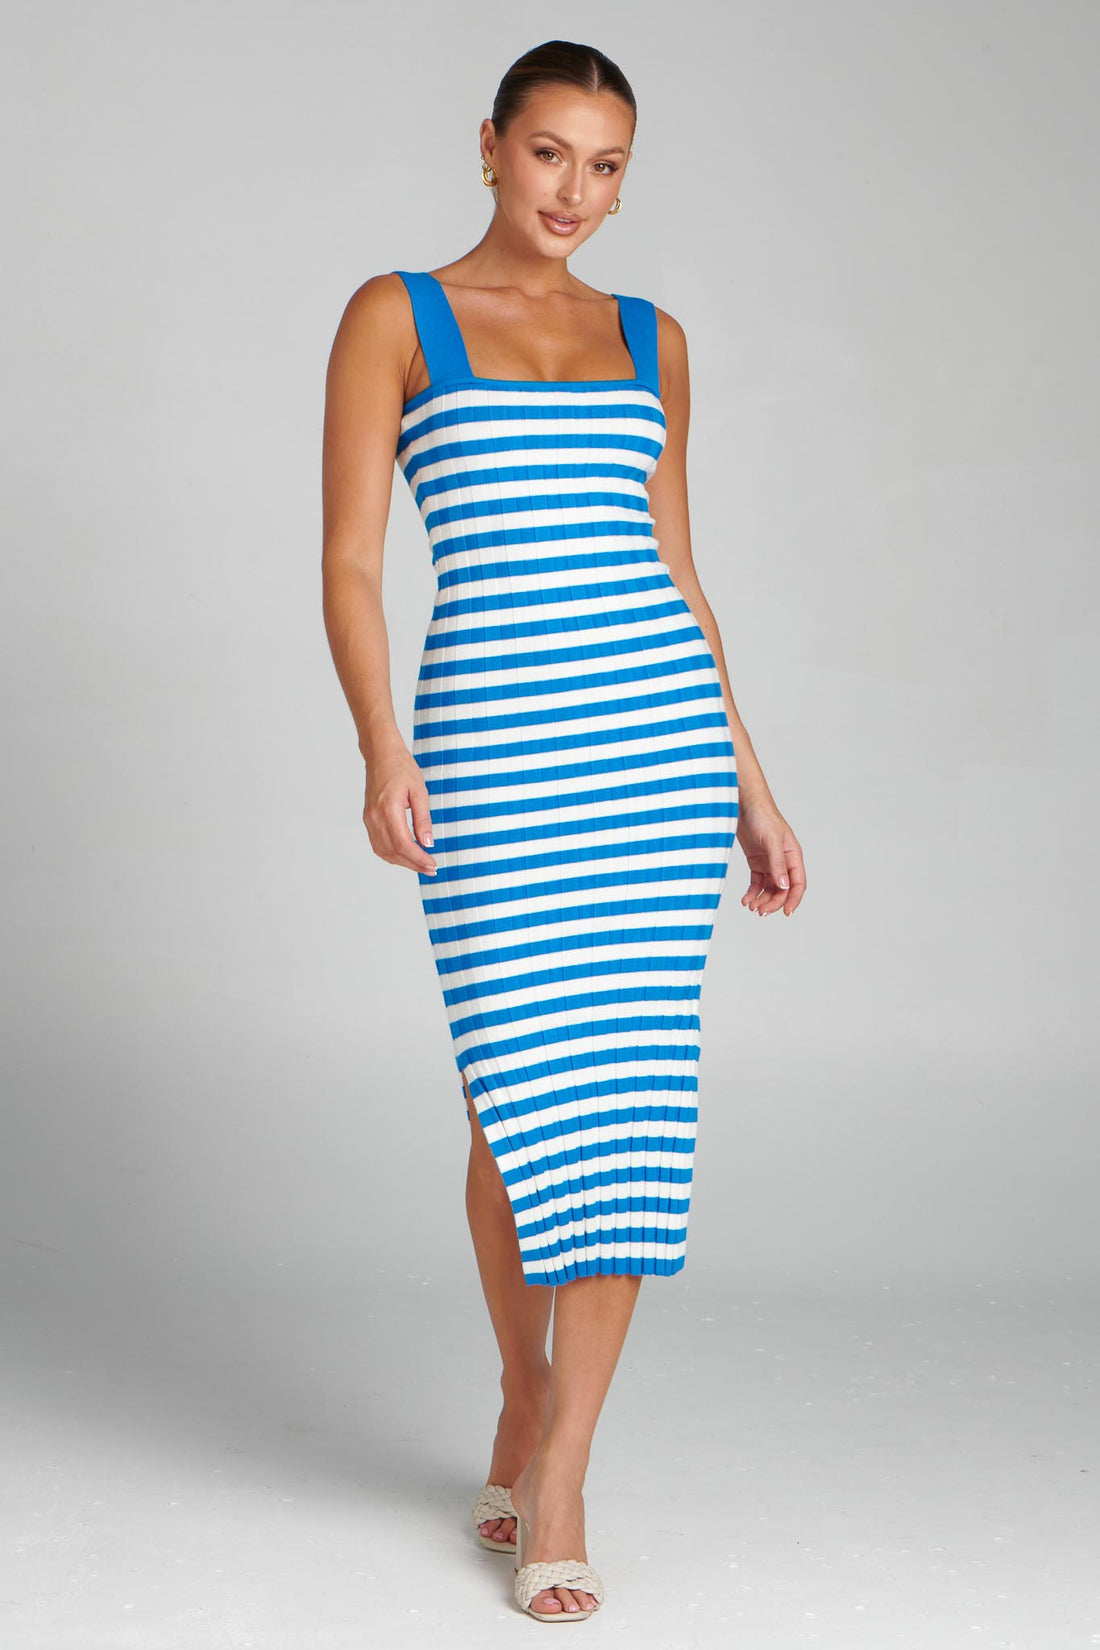 Katie Striped Knit Dress - Blue/White - SALE